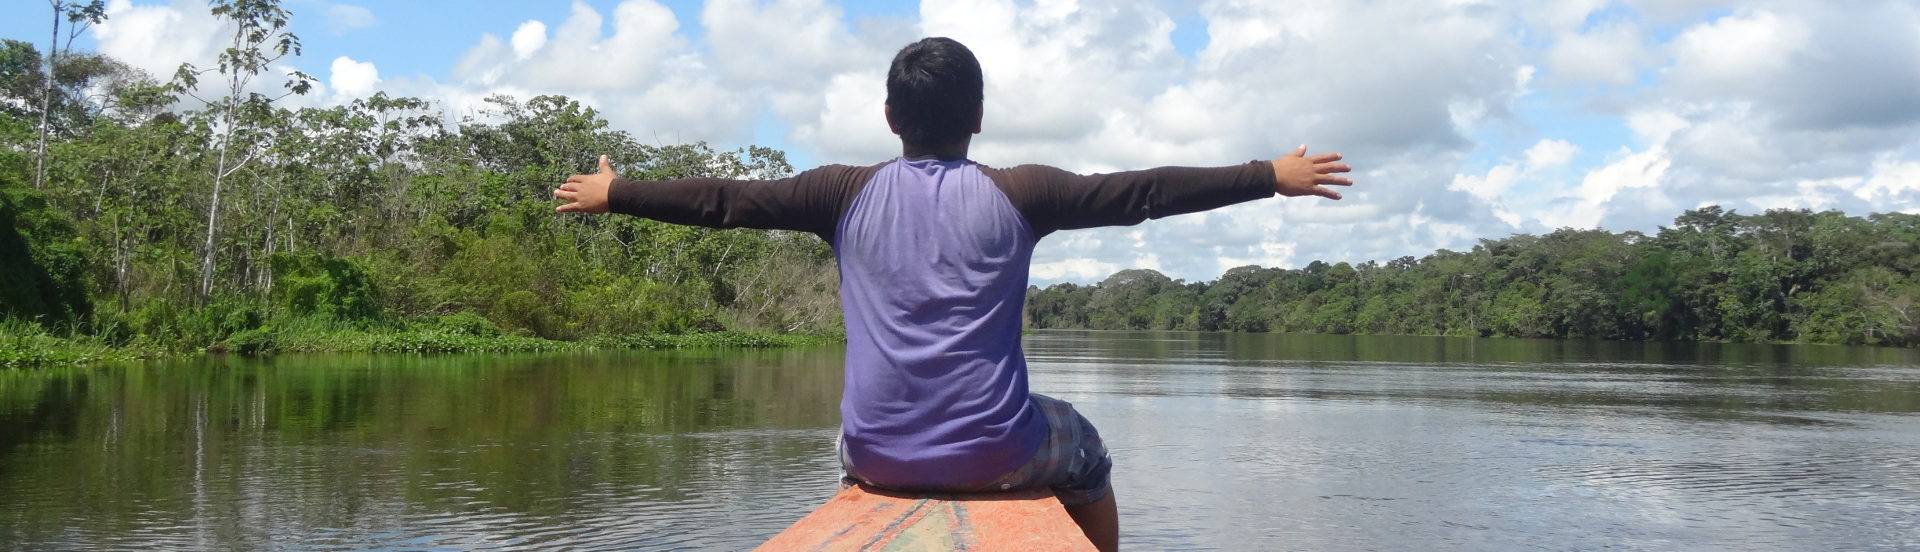 Enjoying in the Amazon river